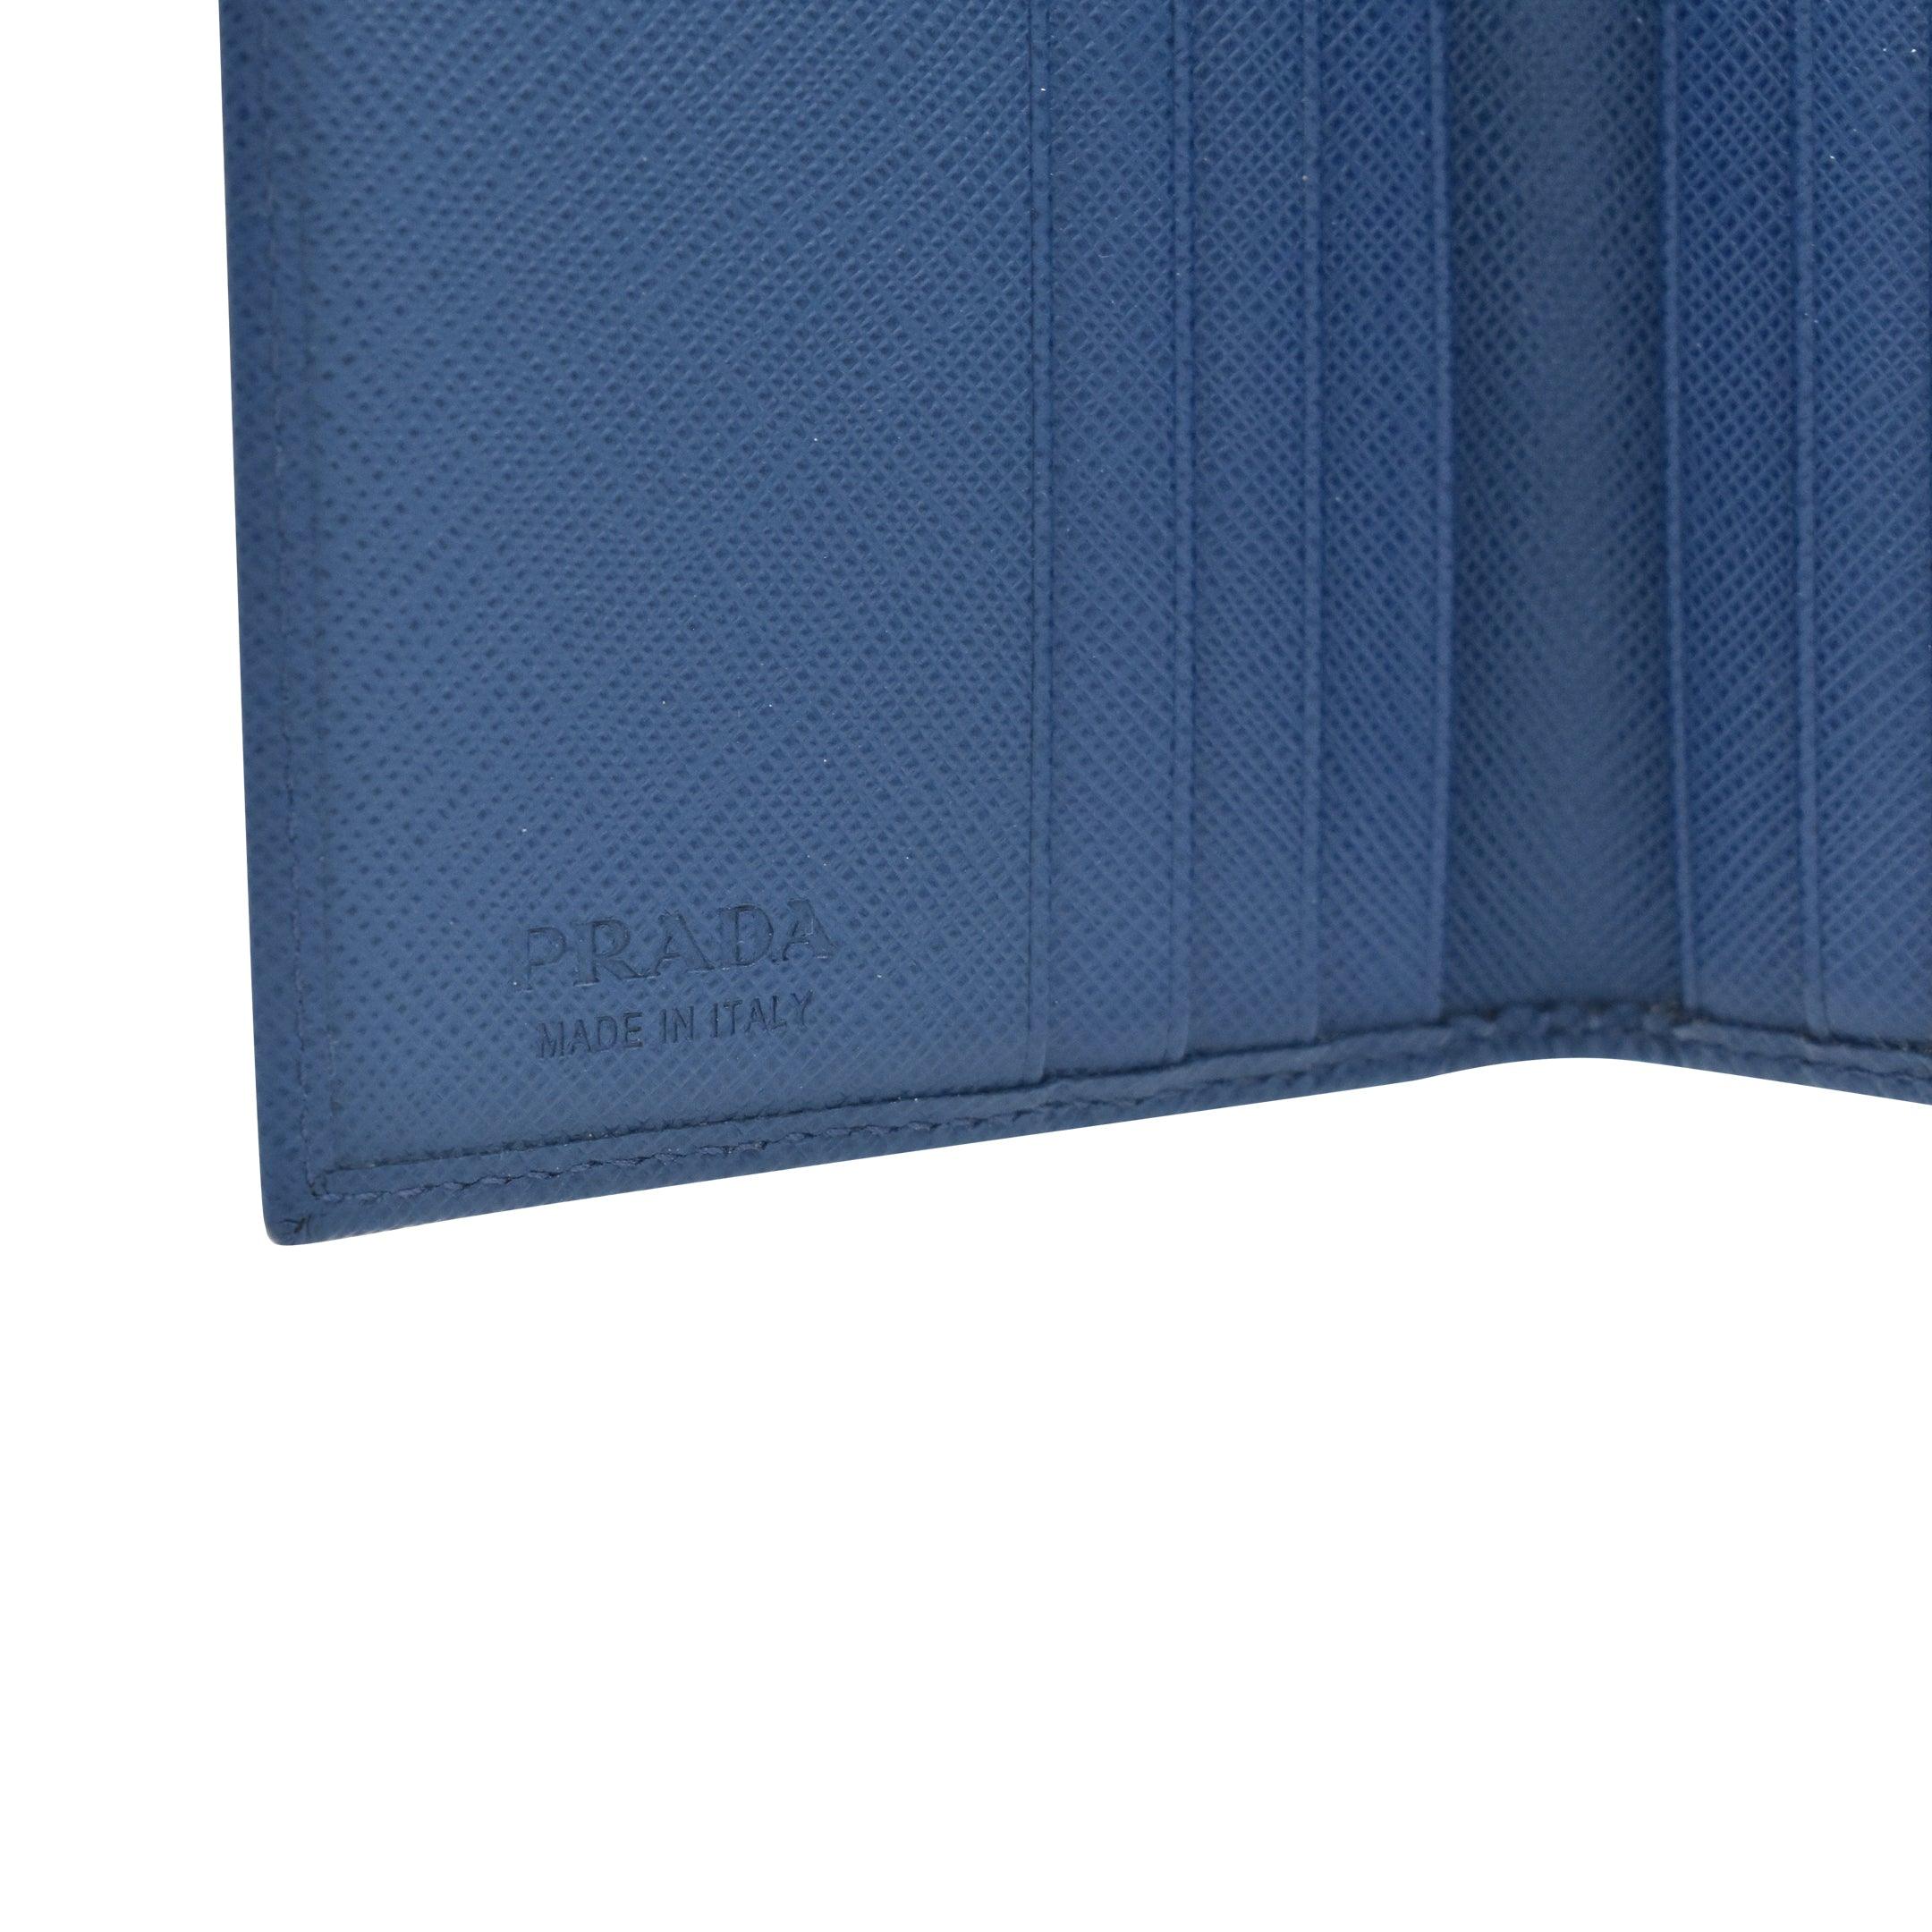 Prada Bifold Wallet - Fashionably Yours